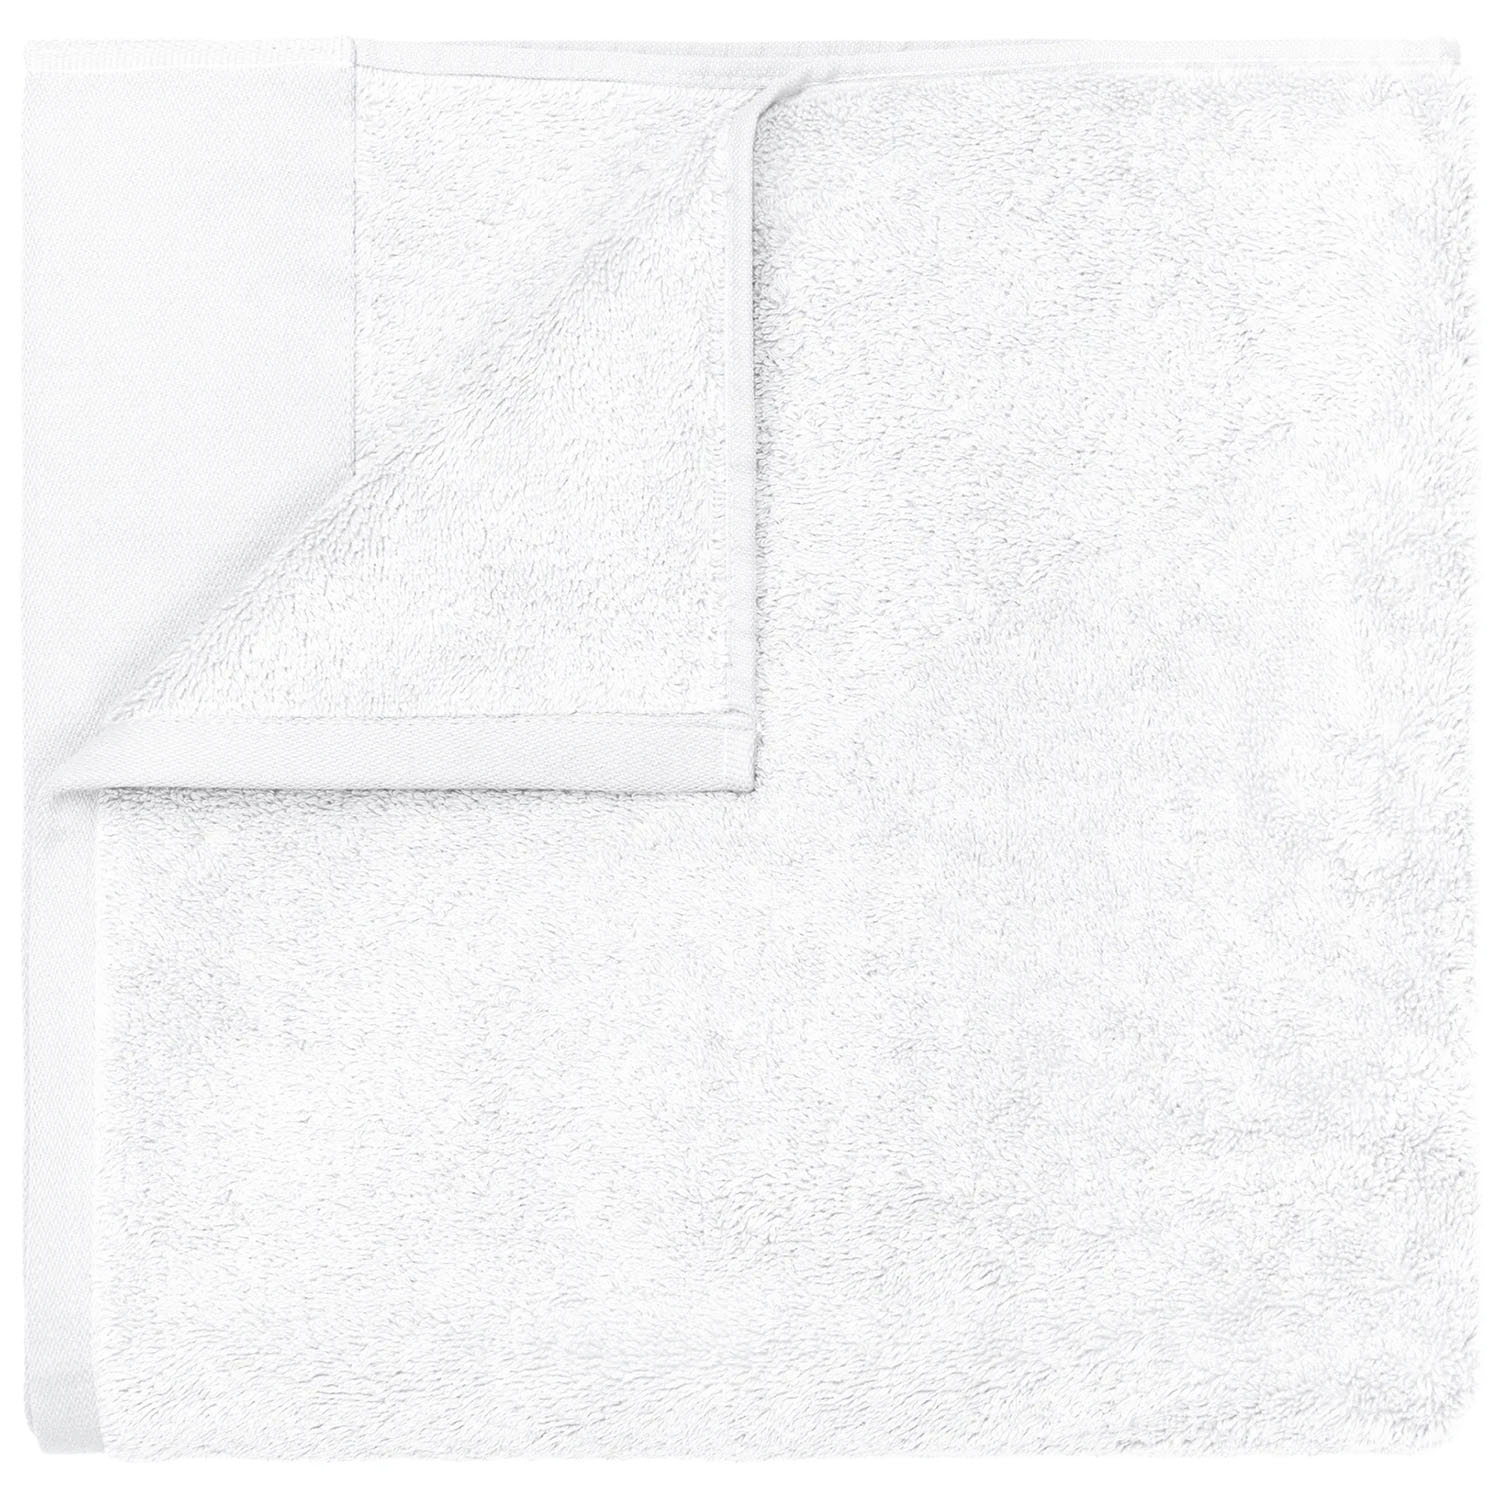 Riva Organic Terry Cloth Hand Towel - Black - Blomus